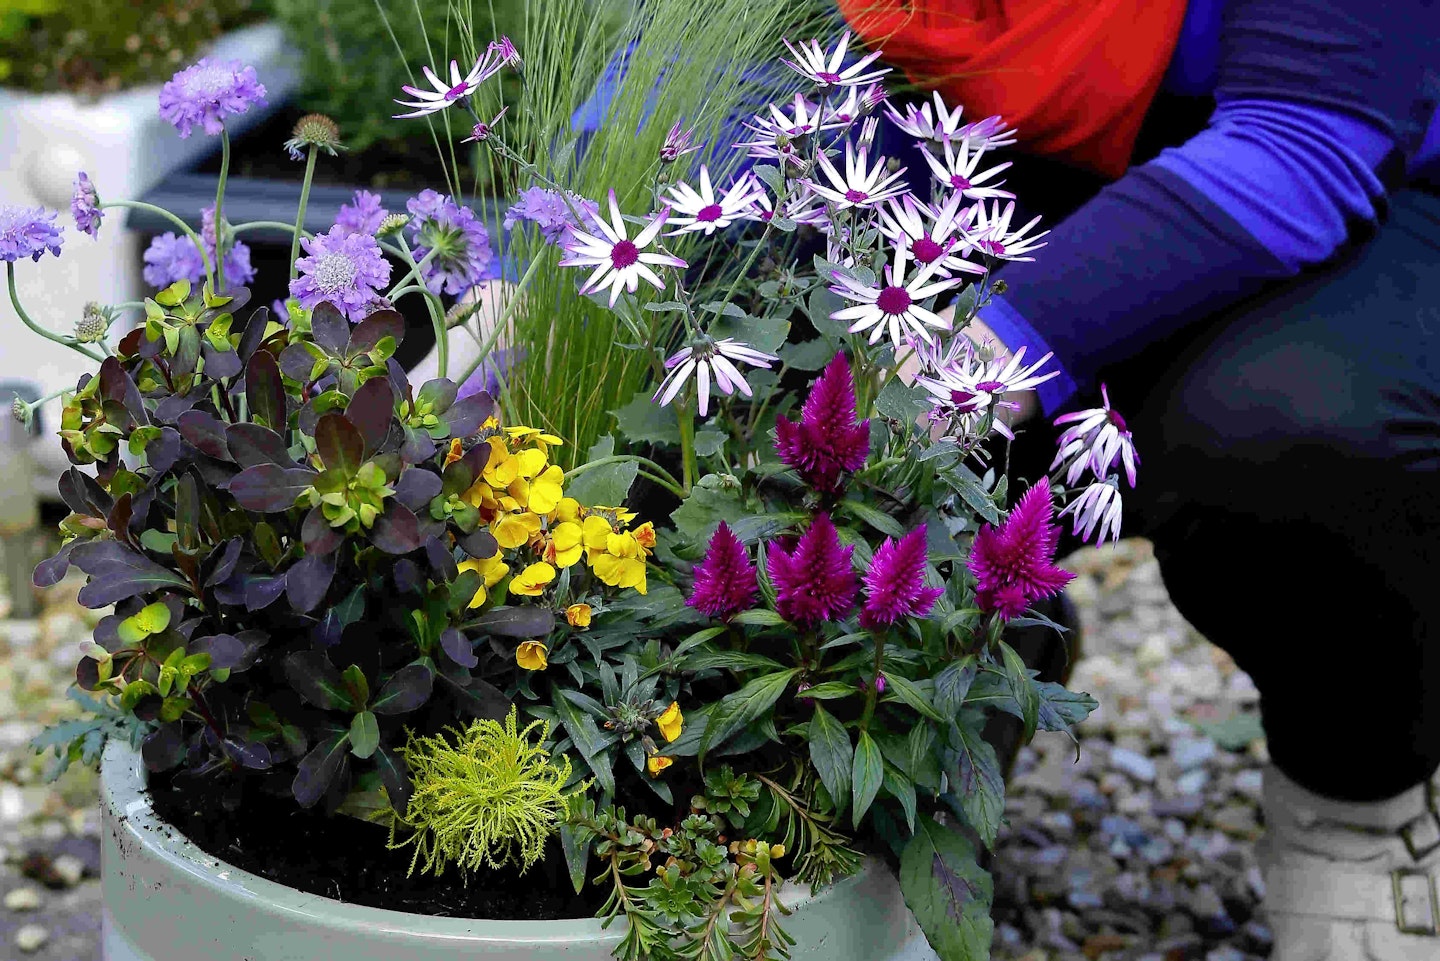 Plant an unusual patio pot